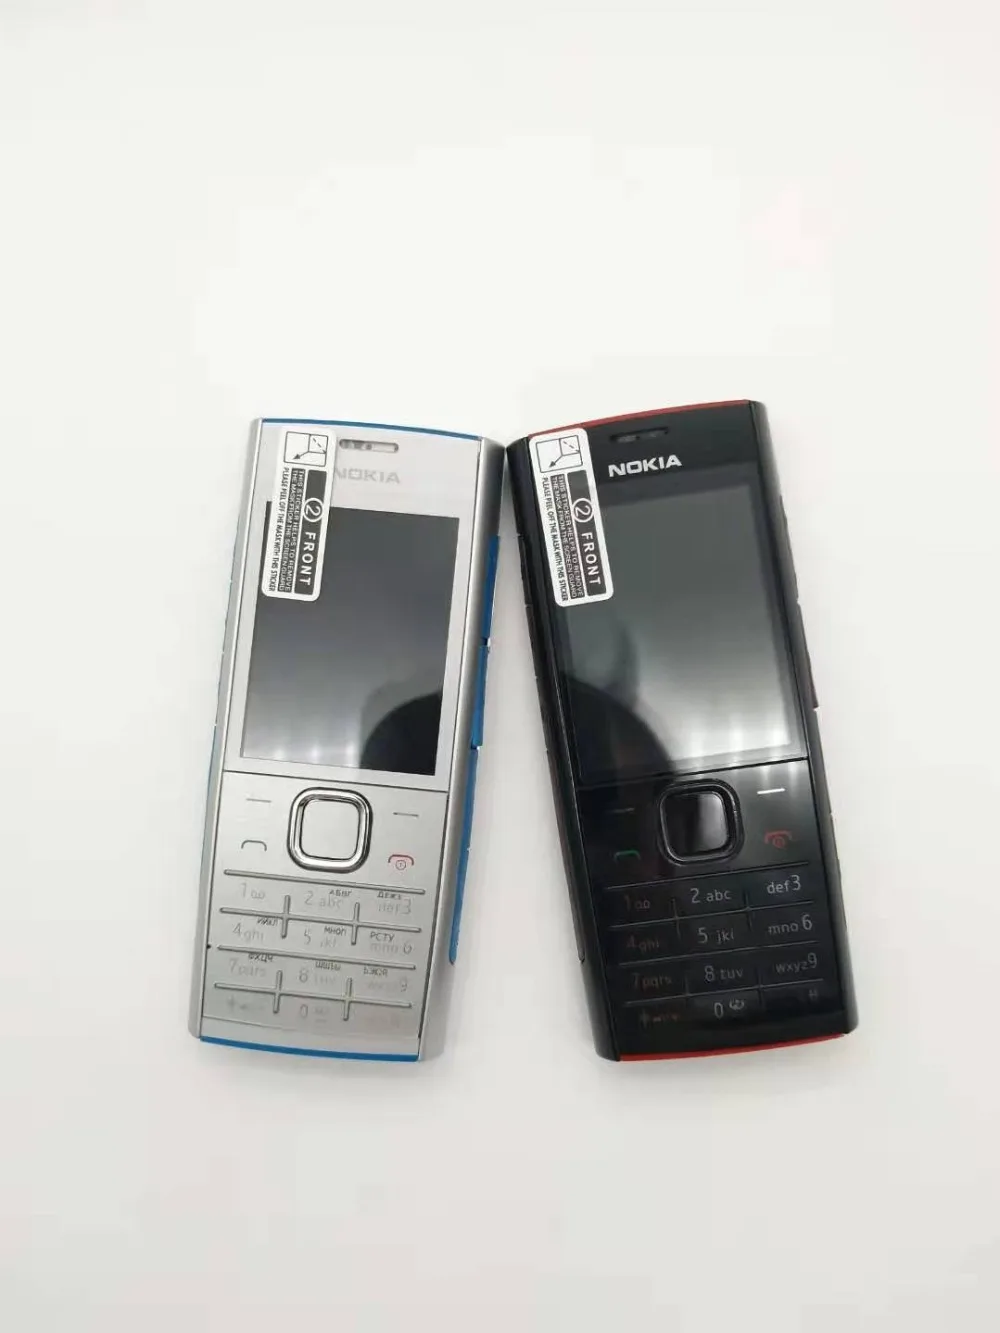 Nokia X2-00 refurbished-Original Nokia X2-00 FM JAVA 5MP Unlocked Phone with English/Russia/Hebrew/Arabic Keyboard refurbished samsung